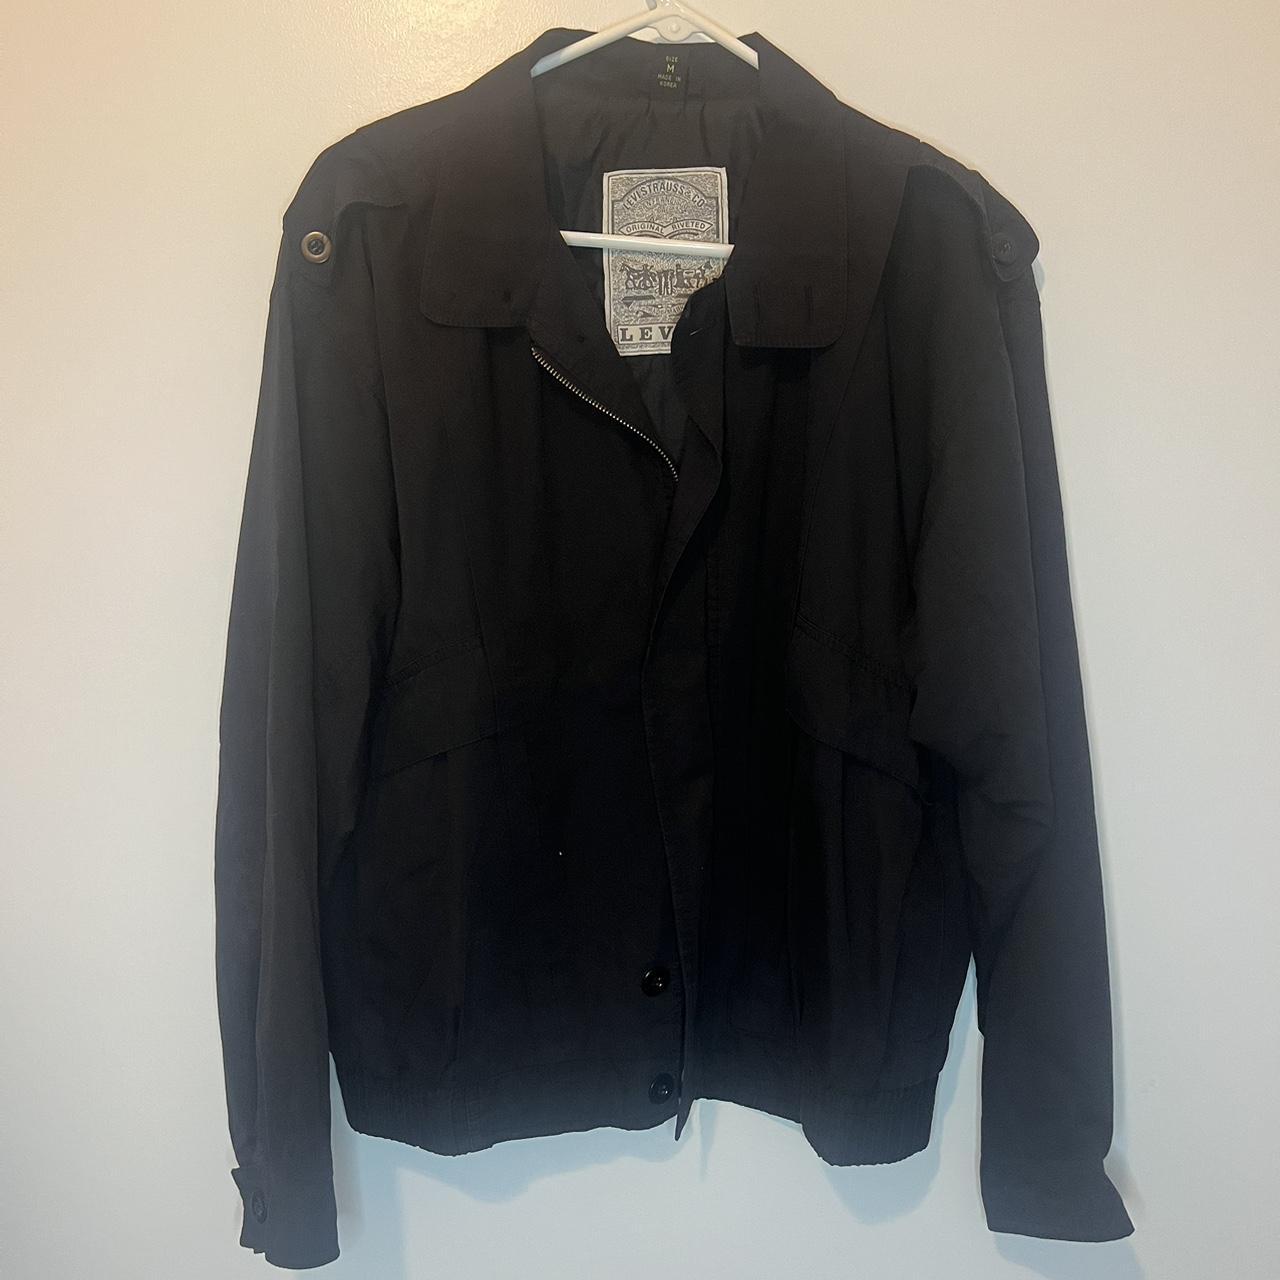 Vintage Levi's Lightweight Jacket. Great quality and... - Depop